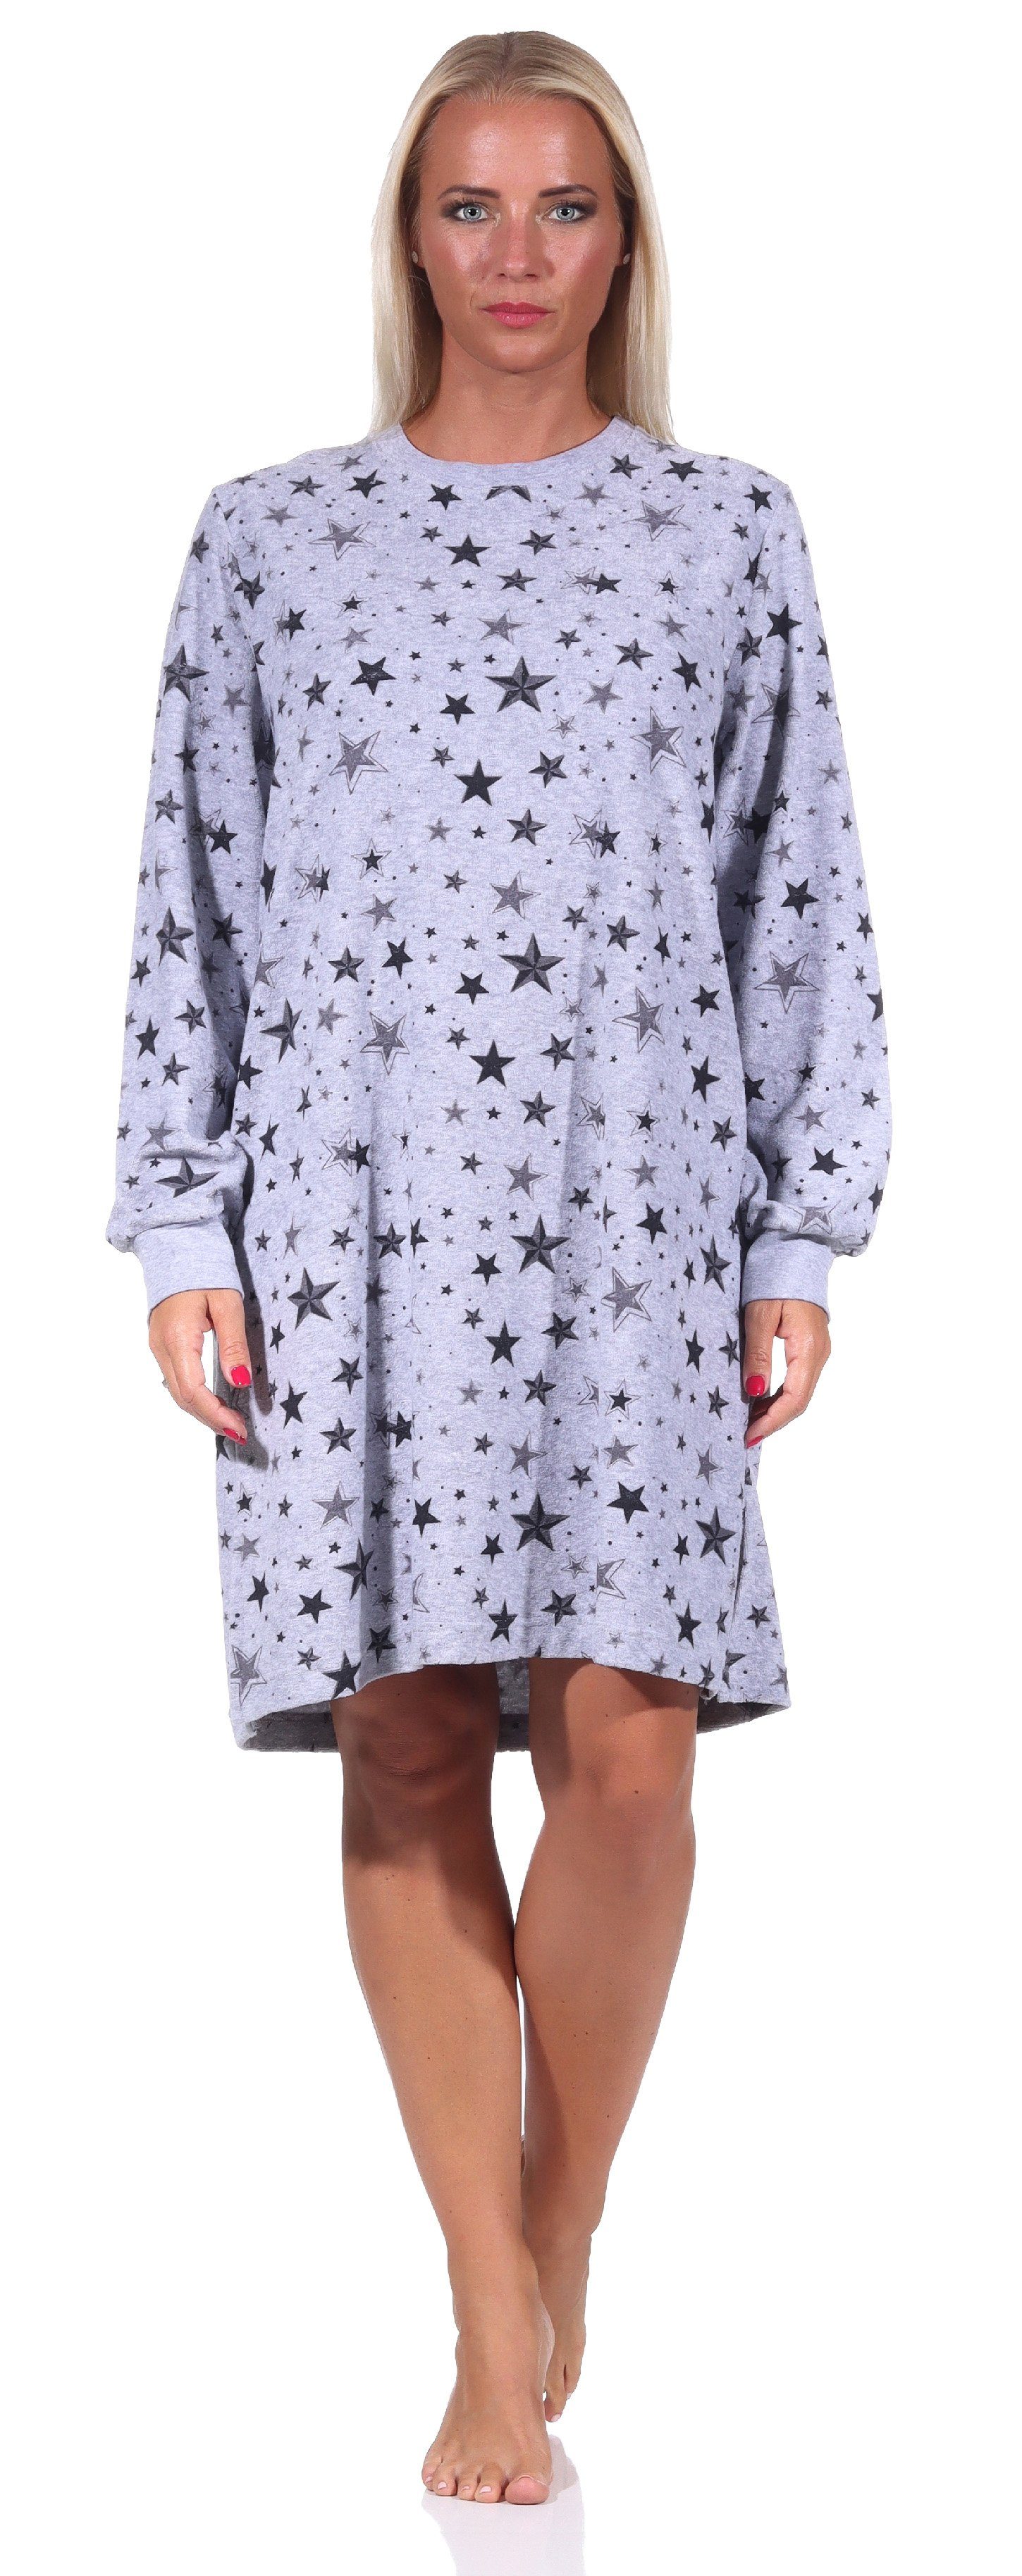 Normann Nachthemd Damen Frottee Nachthemd mit Bündchen in edlem Sterne Design grau-melange